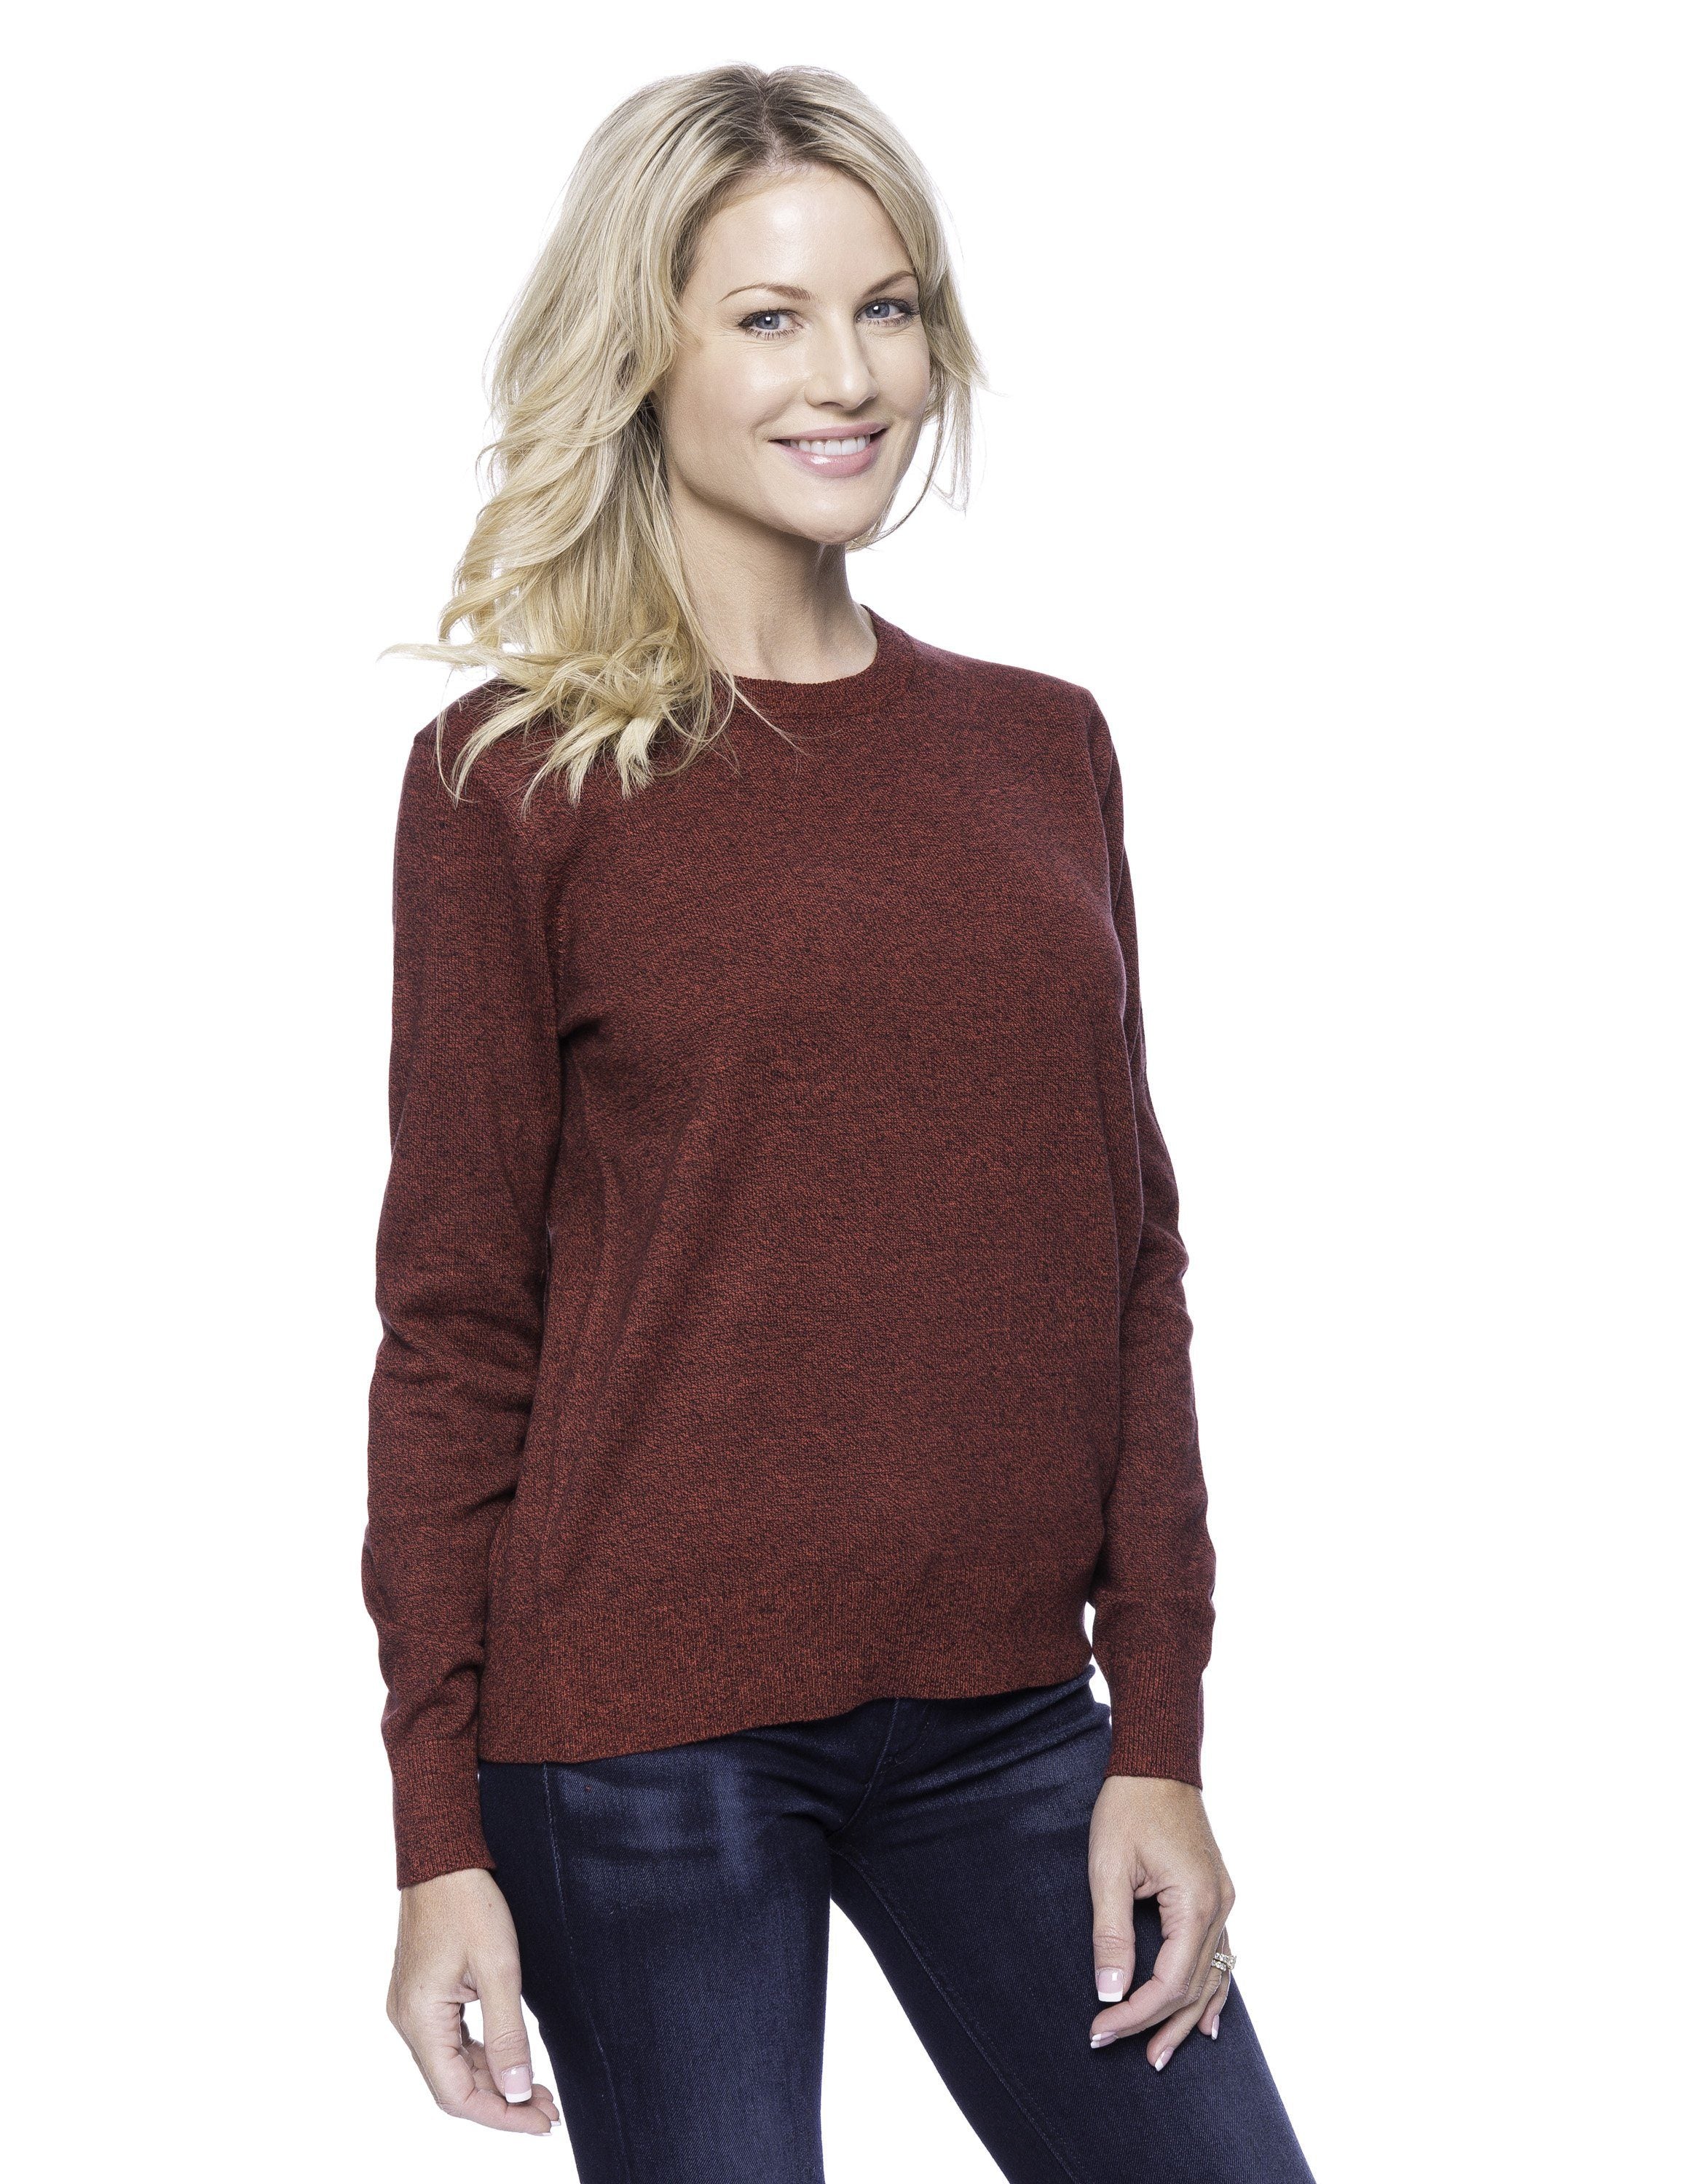 Women's Premium 100% Cotton Crew Neck Sweater